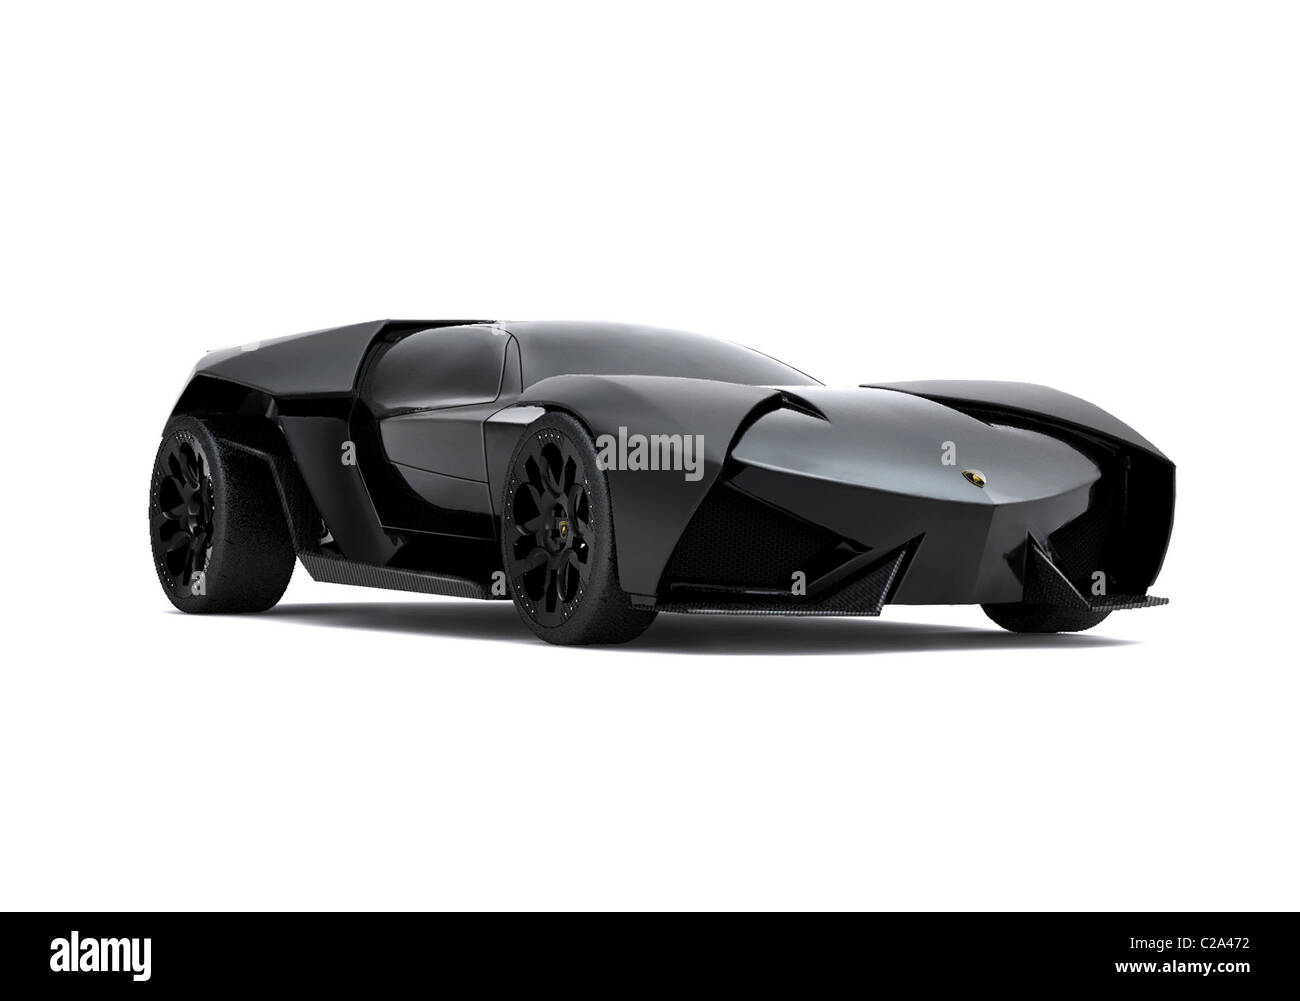 Lamborghini's Batmobile Designers at Lamborghini have come up with a supercar concept: an eco-friendly Batmobile lookalike they Stock Photo